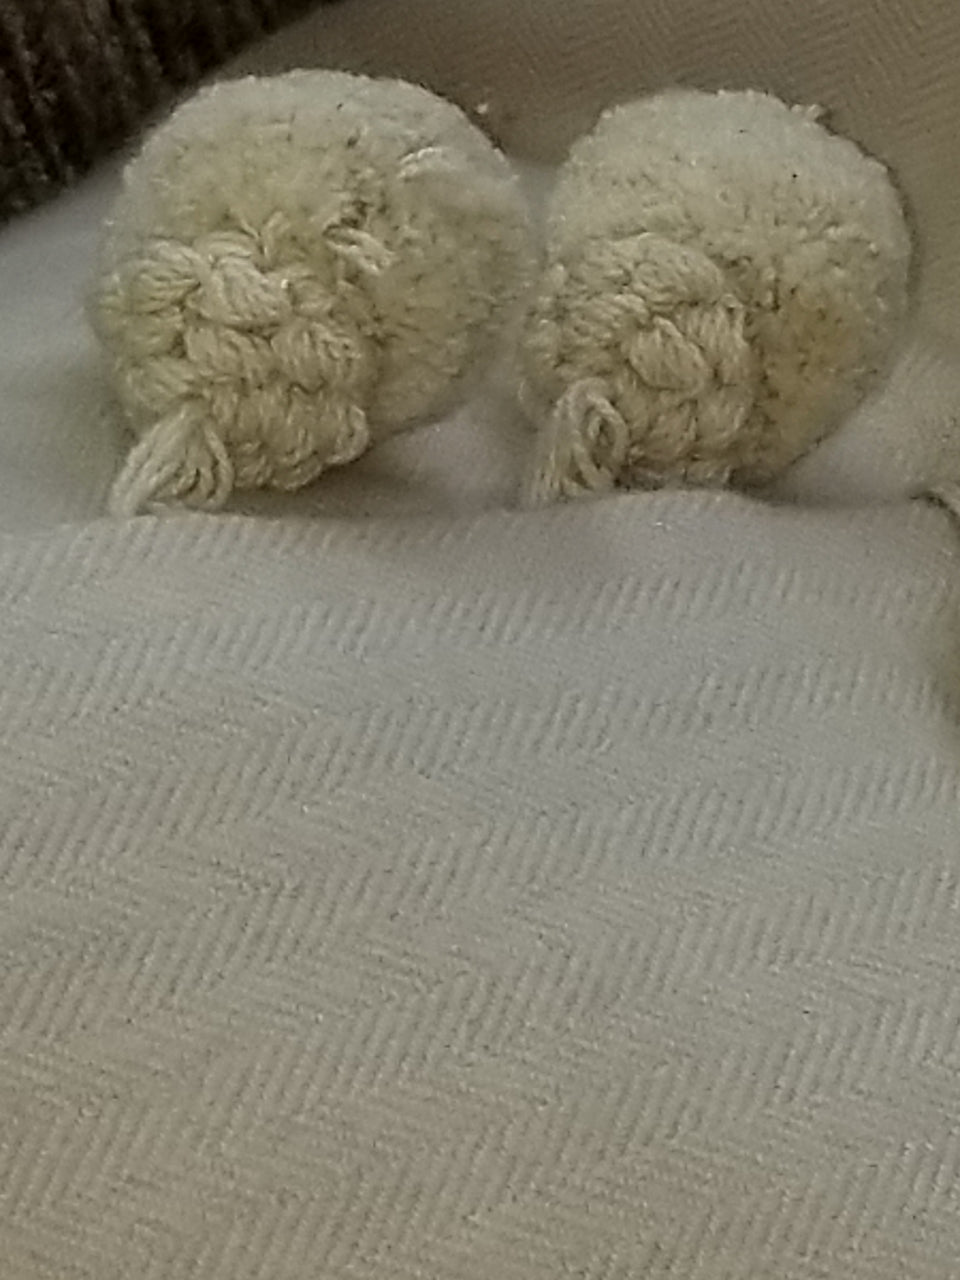 cream herringbone fleece fabric with gimp styled pom pom trim on a throw pillow cover